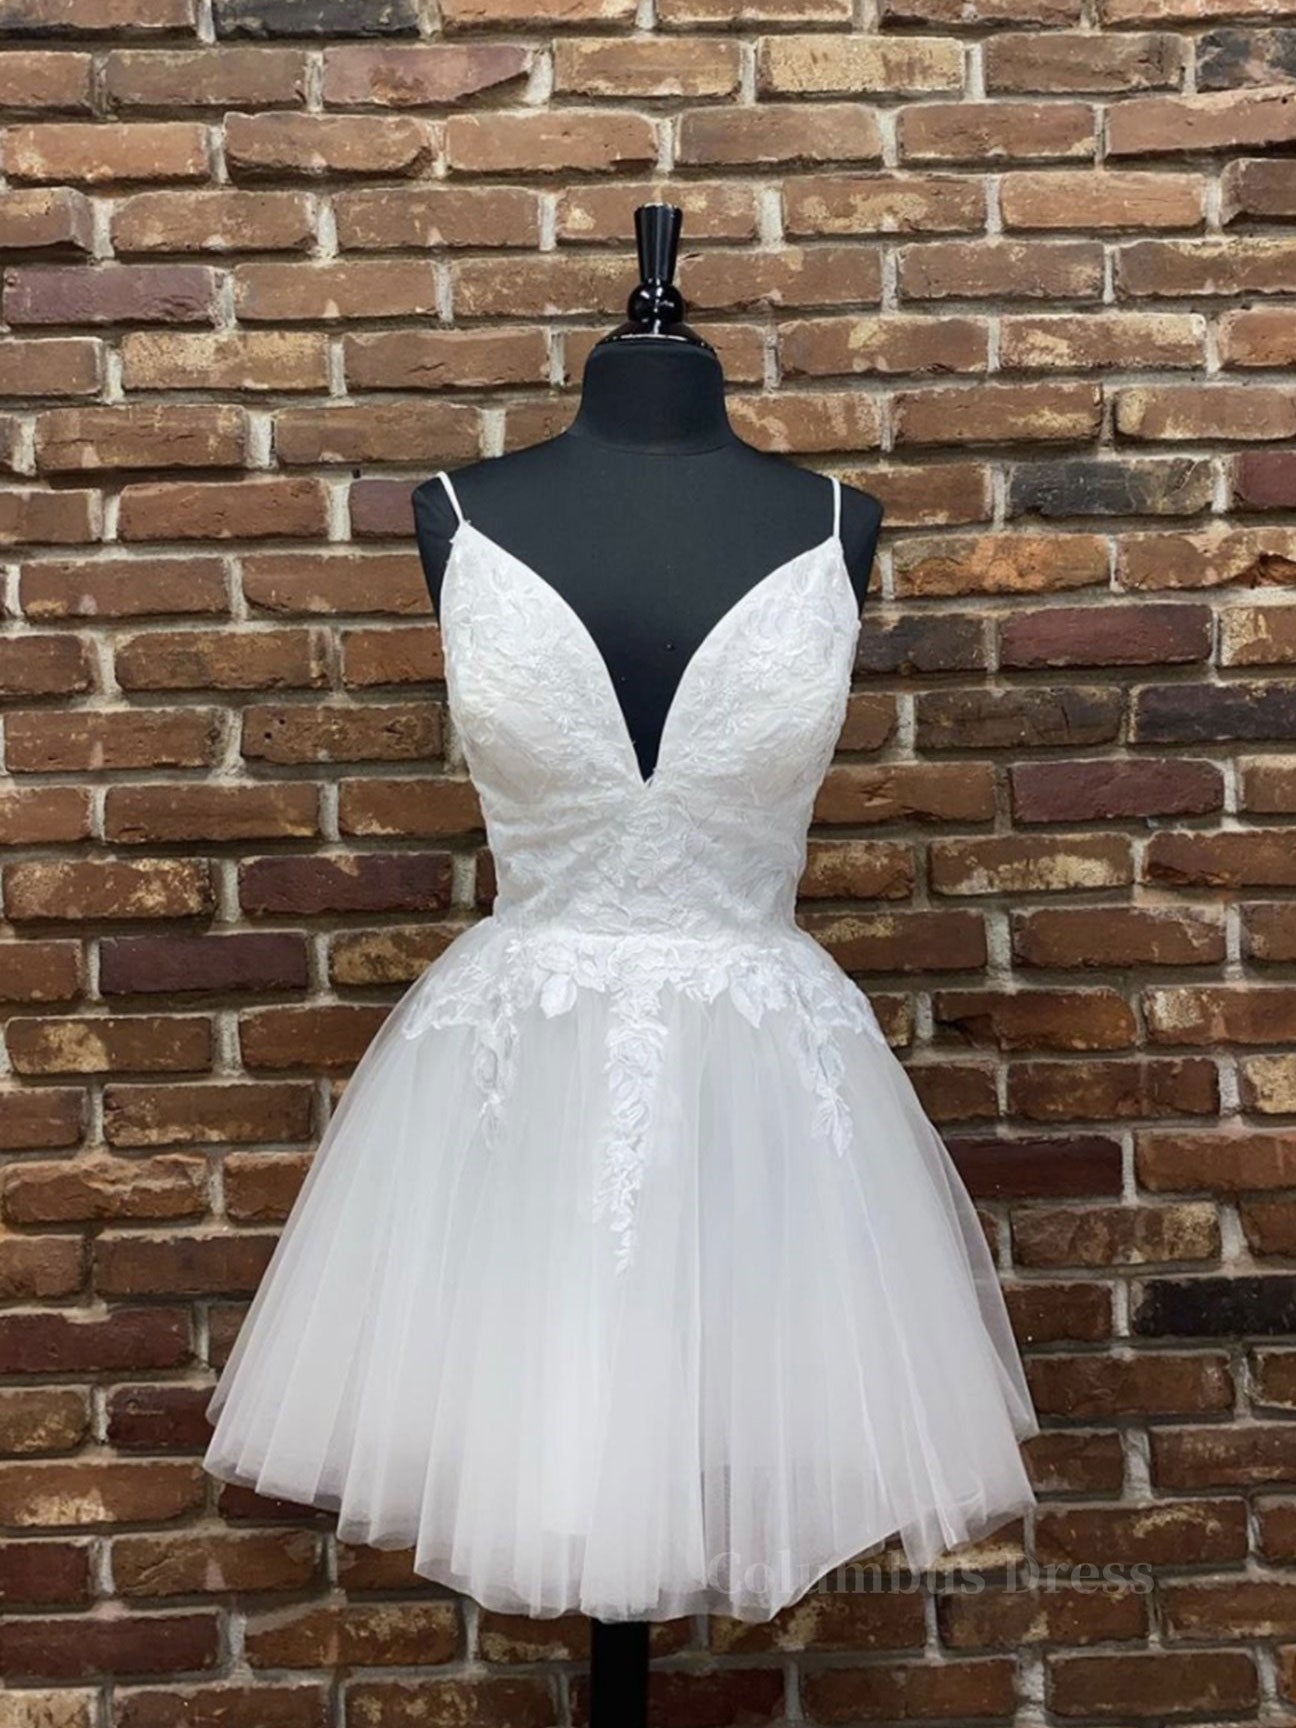 White v neck tulle lace short Corset Prom dress, white Corset Homecoming dress outfit, Homecoming Dresses Bodycon